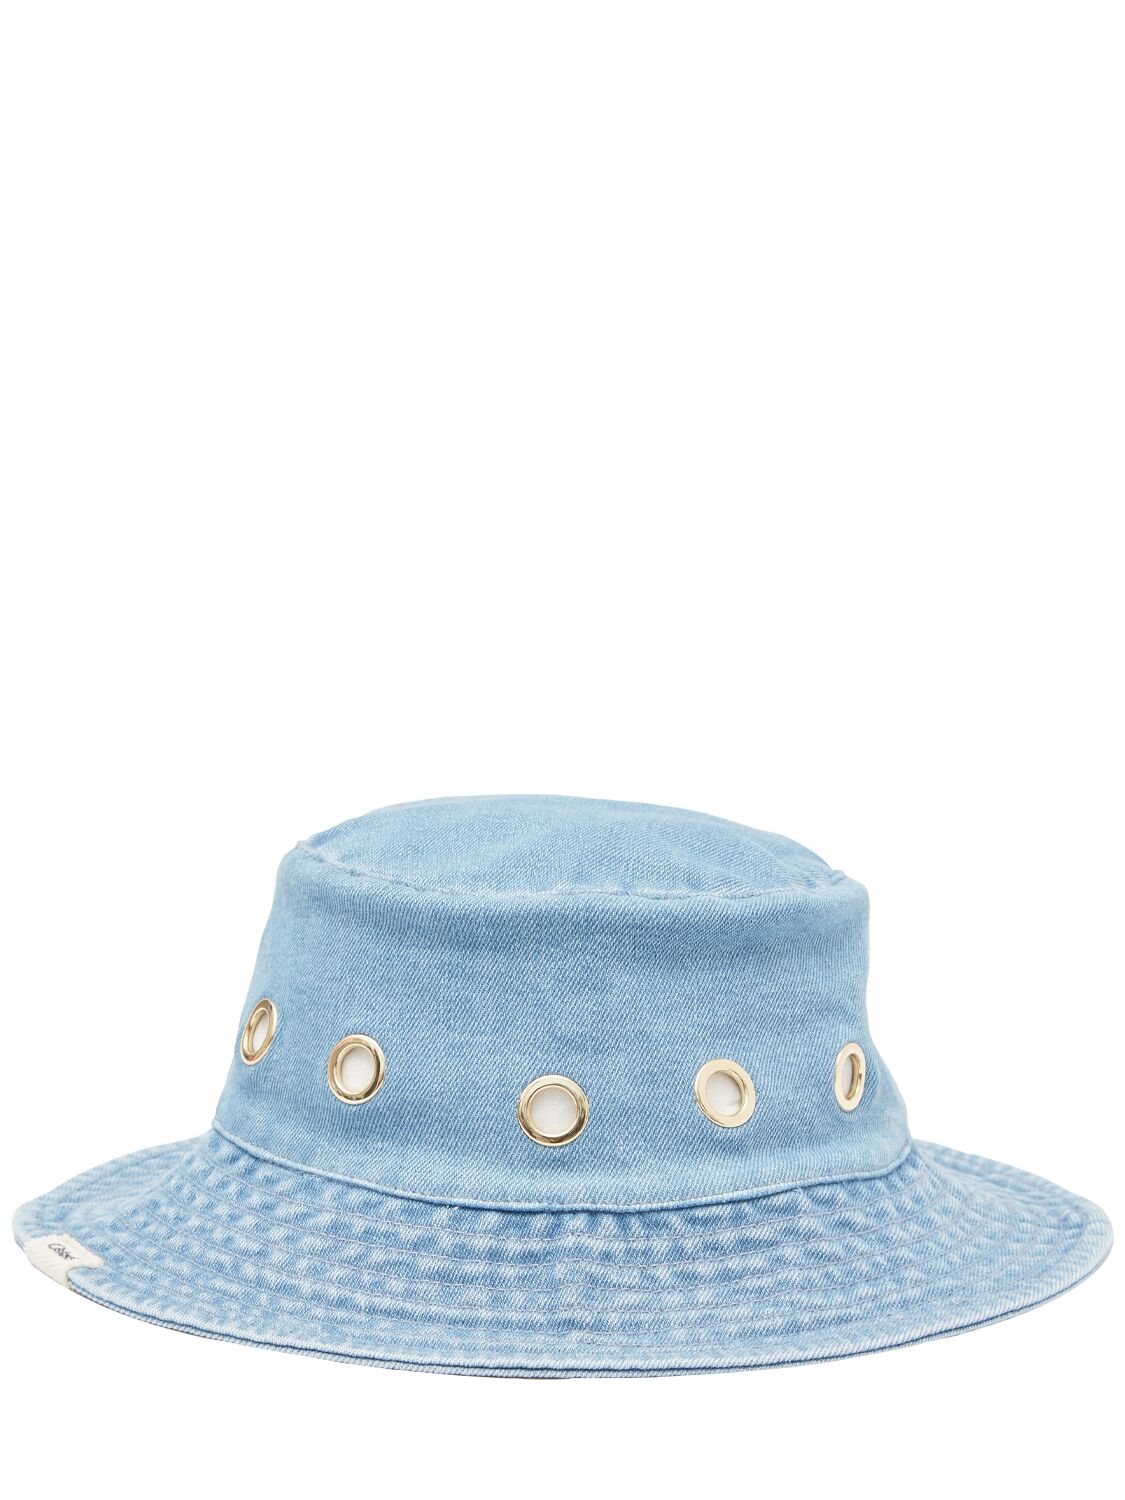 Chloé Kids' Denim Bucket Hat